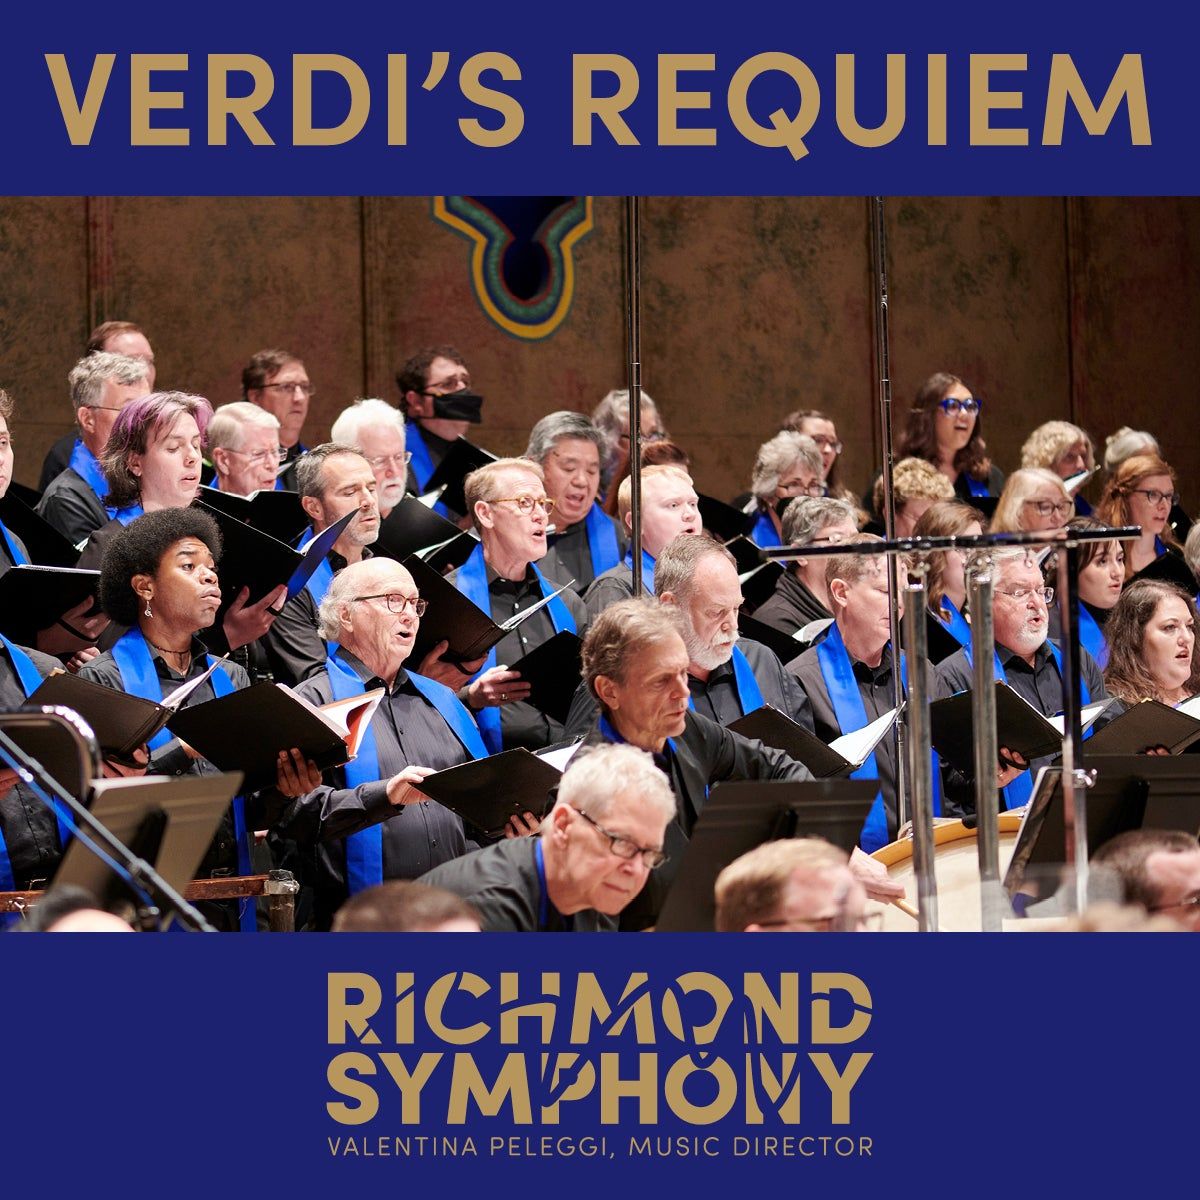 Richmond Symphony - Verdis Requiem (Concert)